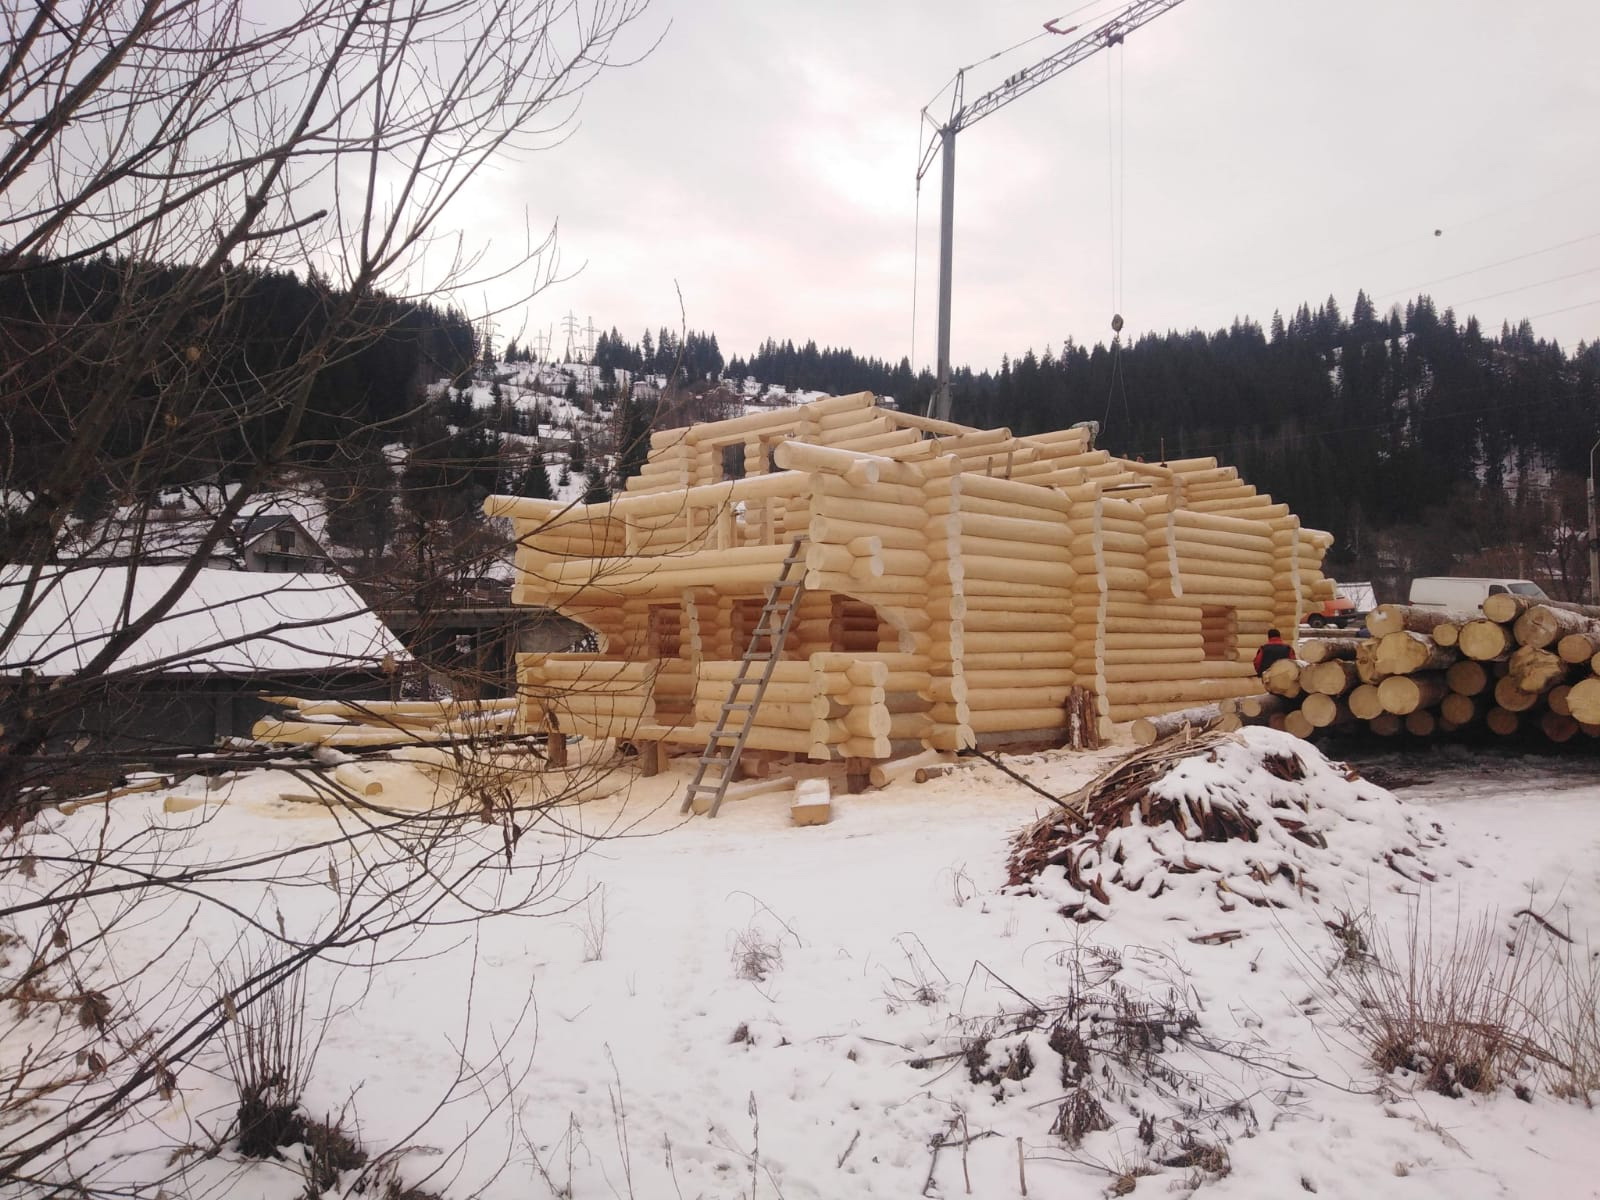 constructii case din busteni lemn rotund